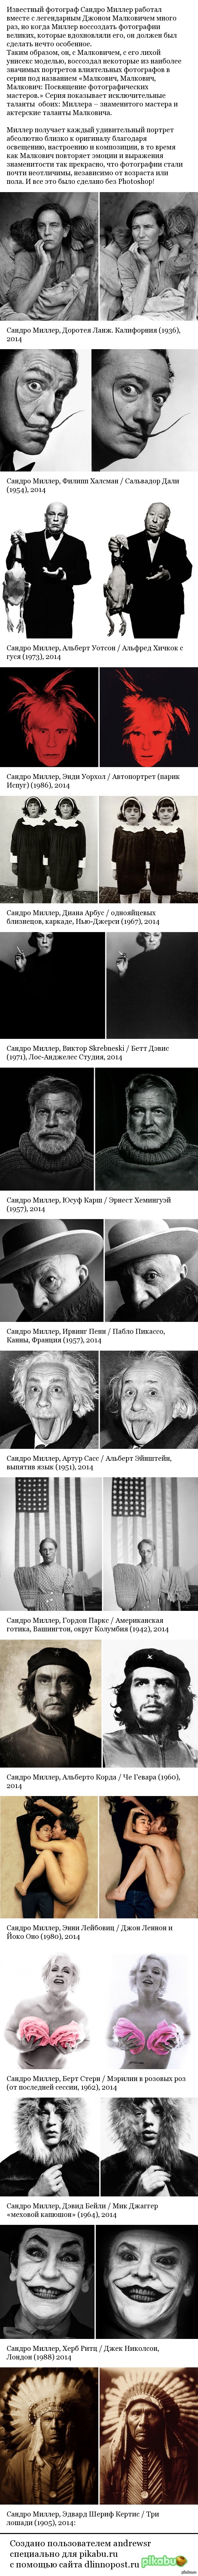 Malkovich, Malkovich, Malkovich: Dedication of the Photographic Masters - Not photoshop, Celebrities, Longpost, The photo, PHOTOSESSION, Sandro Miller, John Malkovich, NSFW